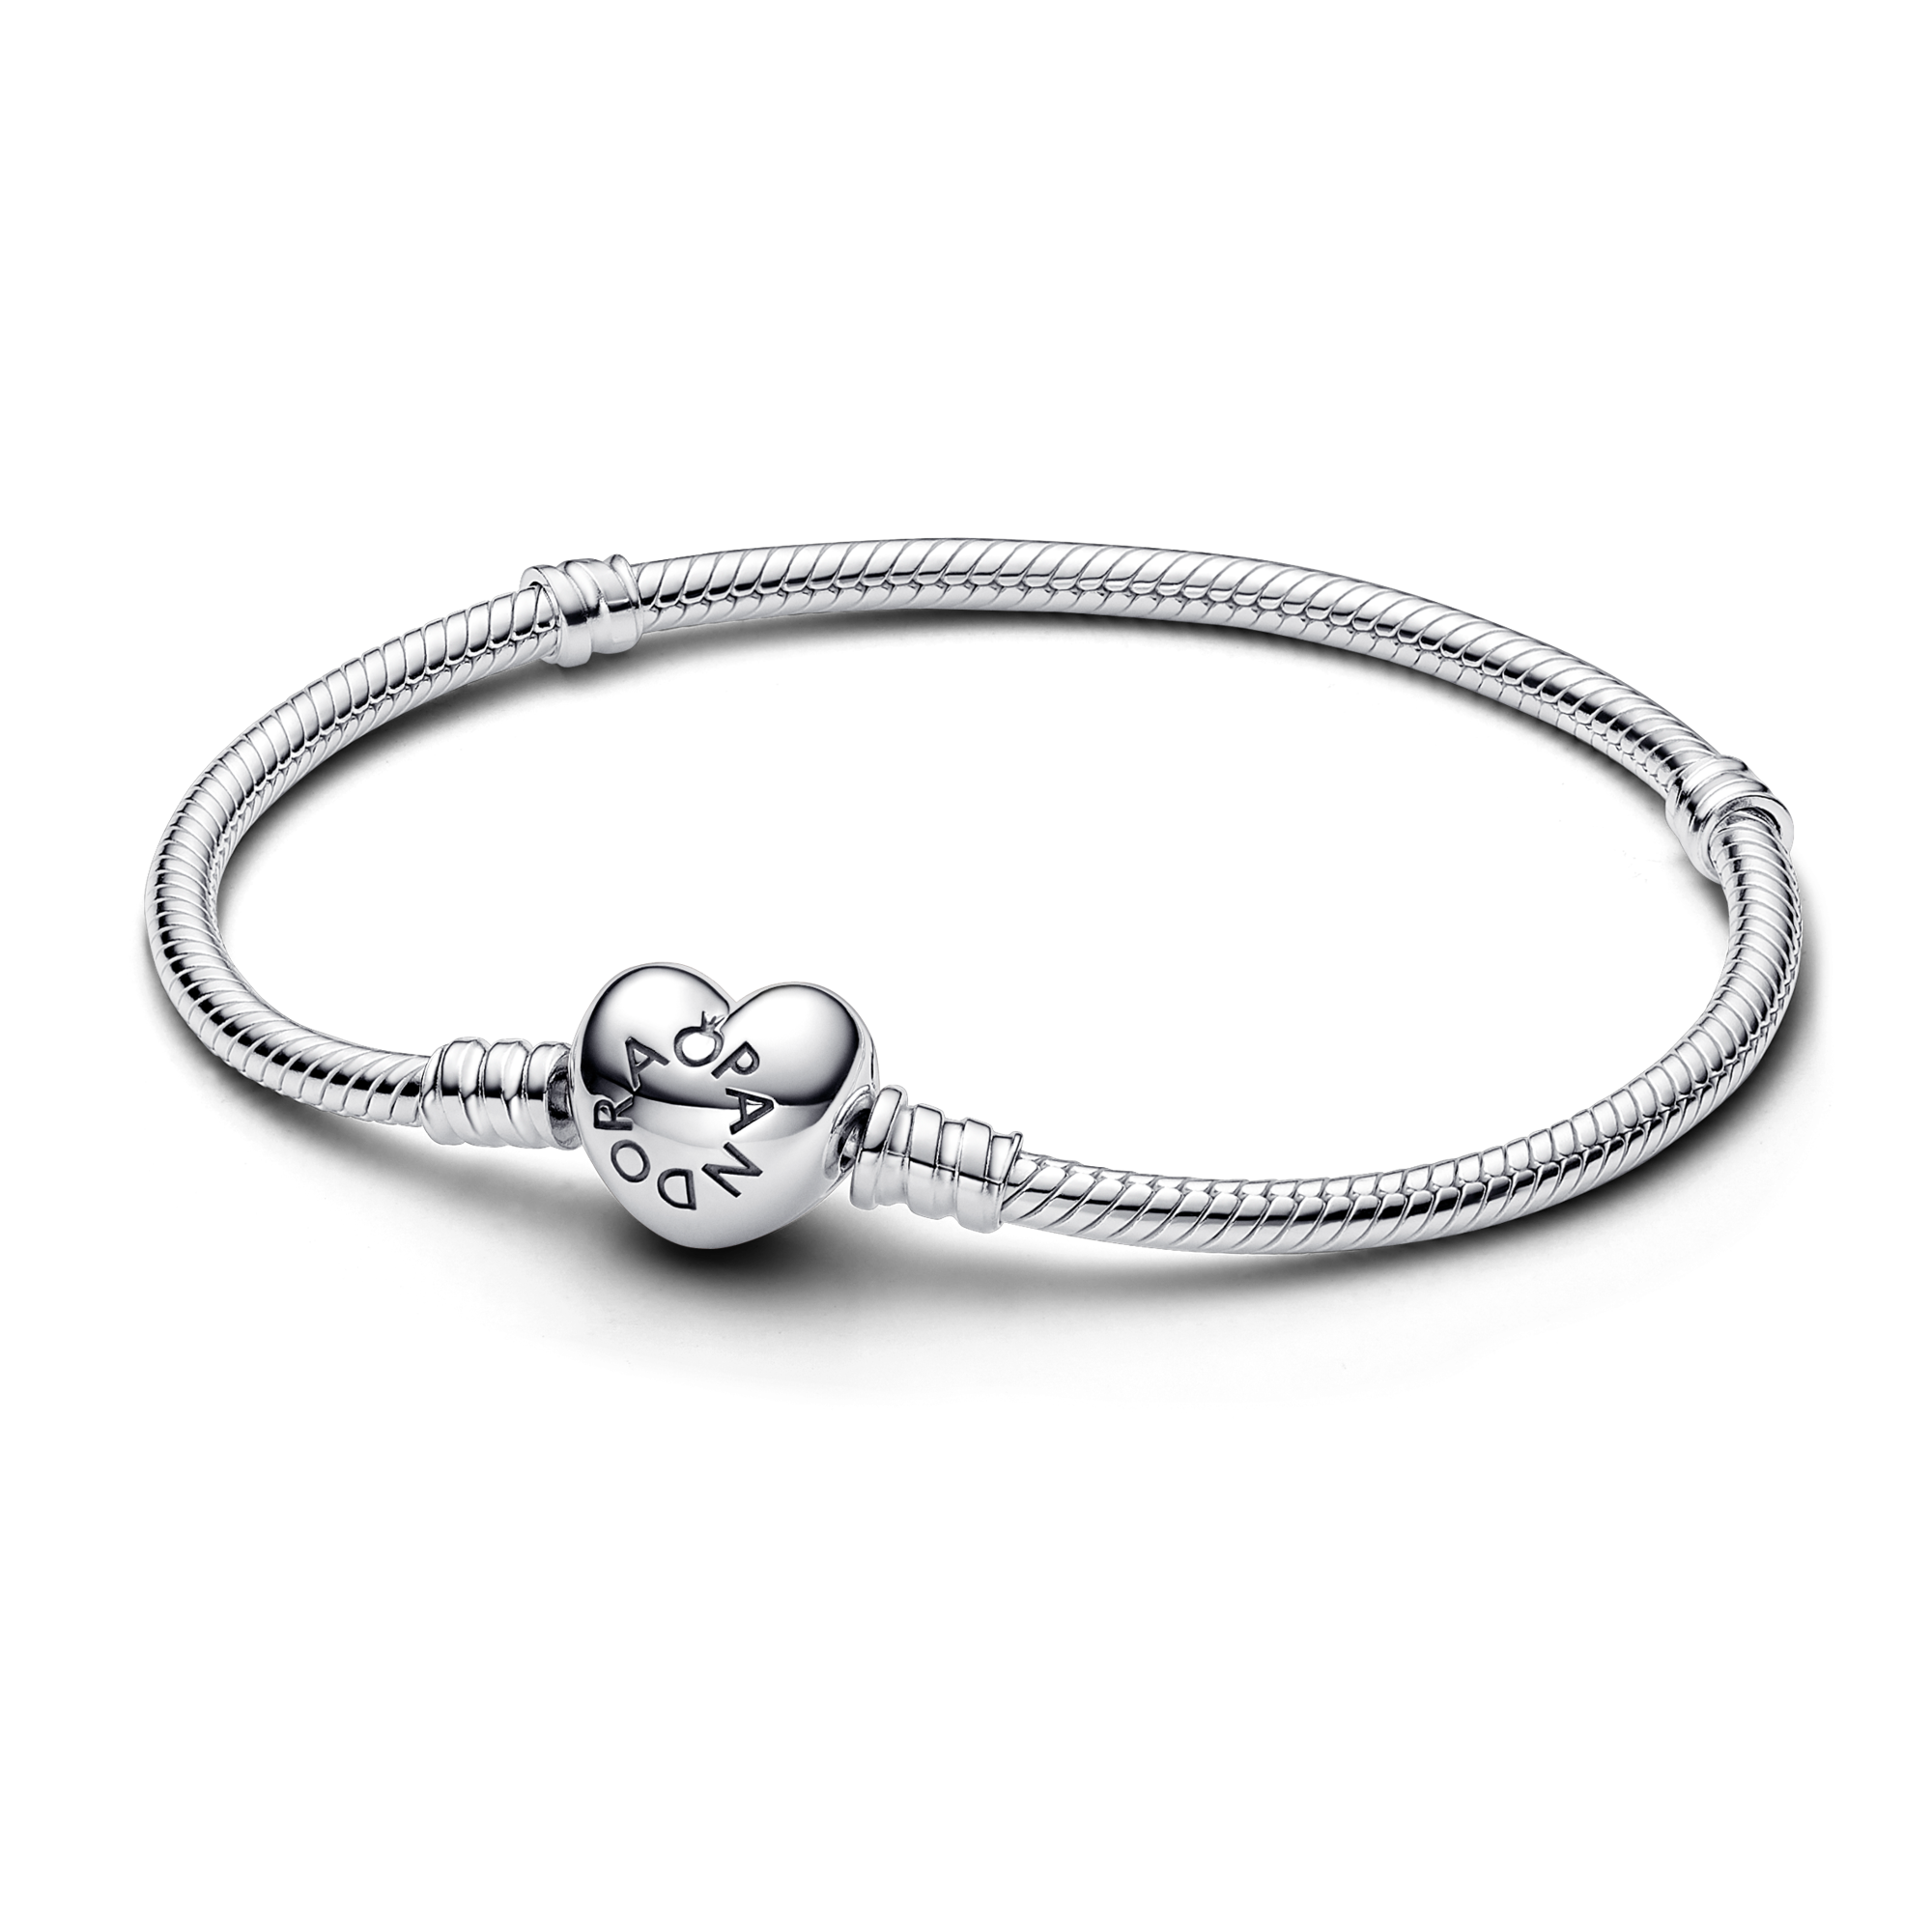 Pandora Moments Charm Key Ring 399566C00 - Pandora Jewellery from Gift and  Wrap UK